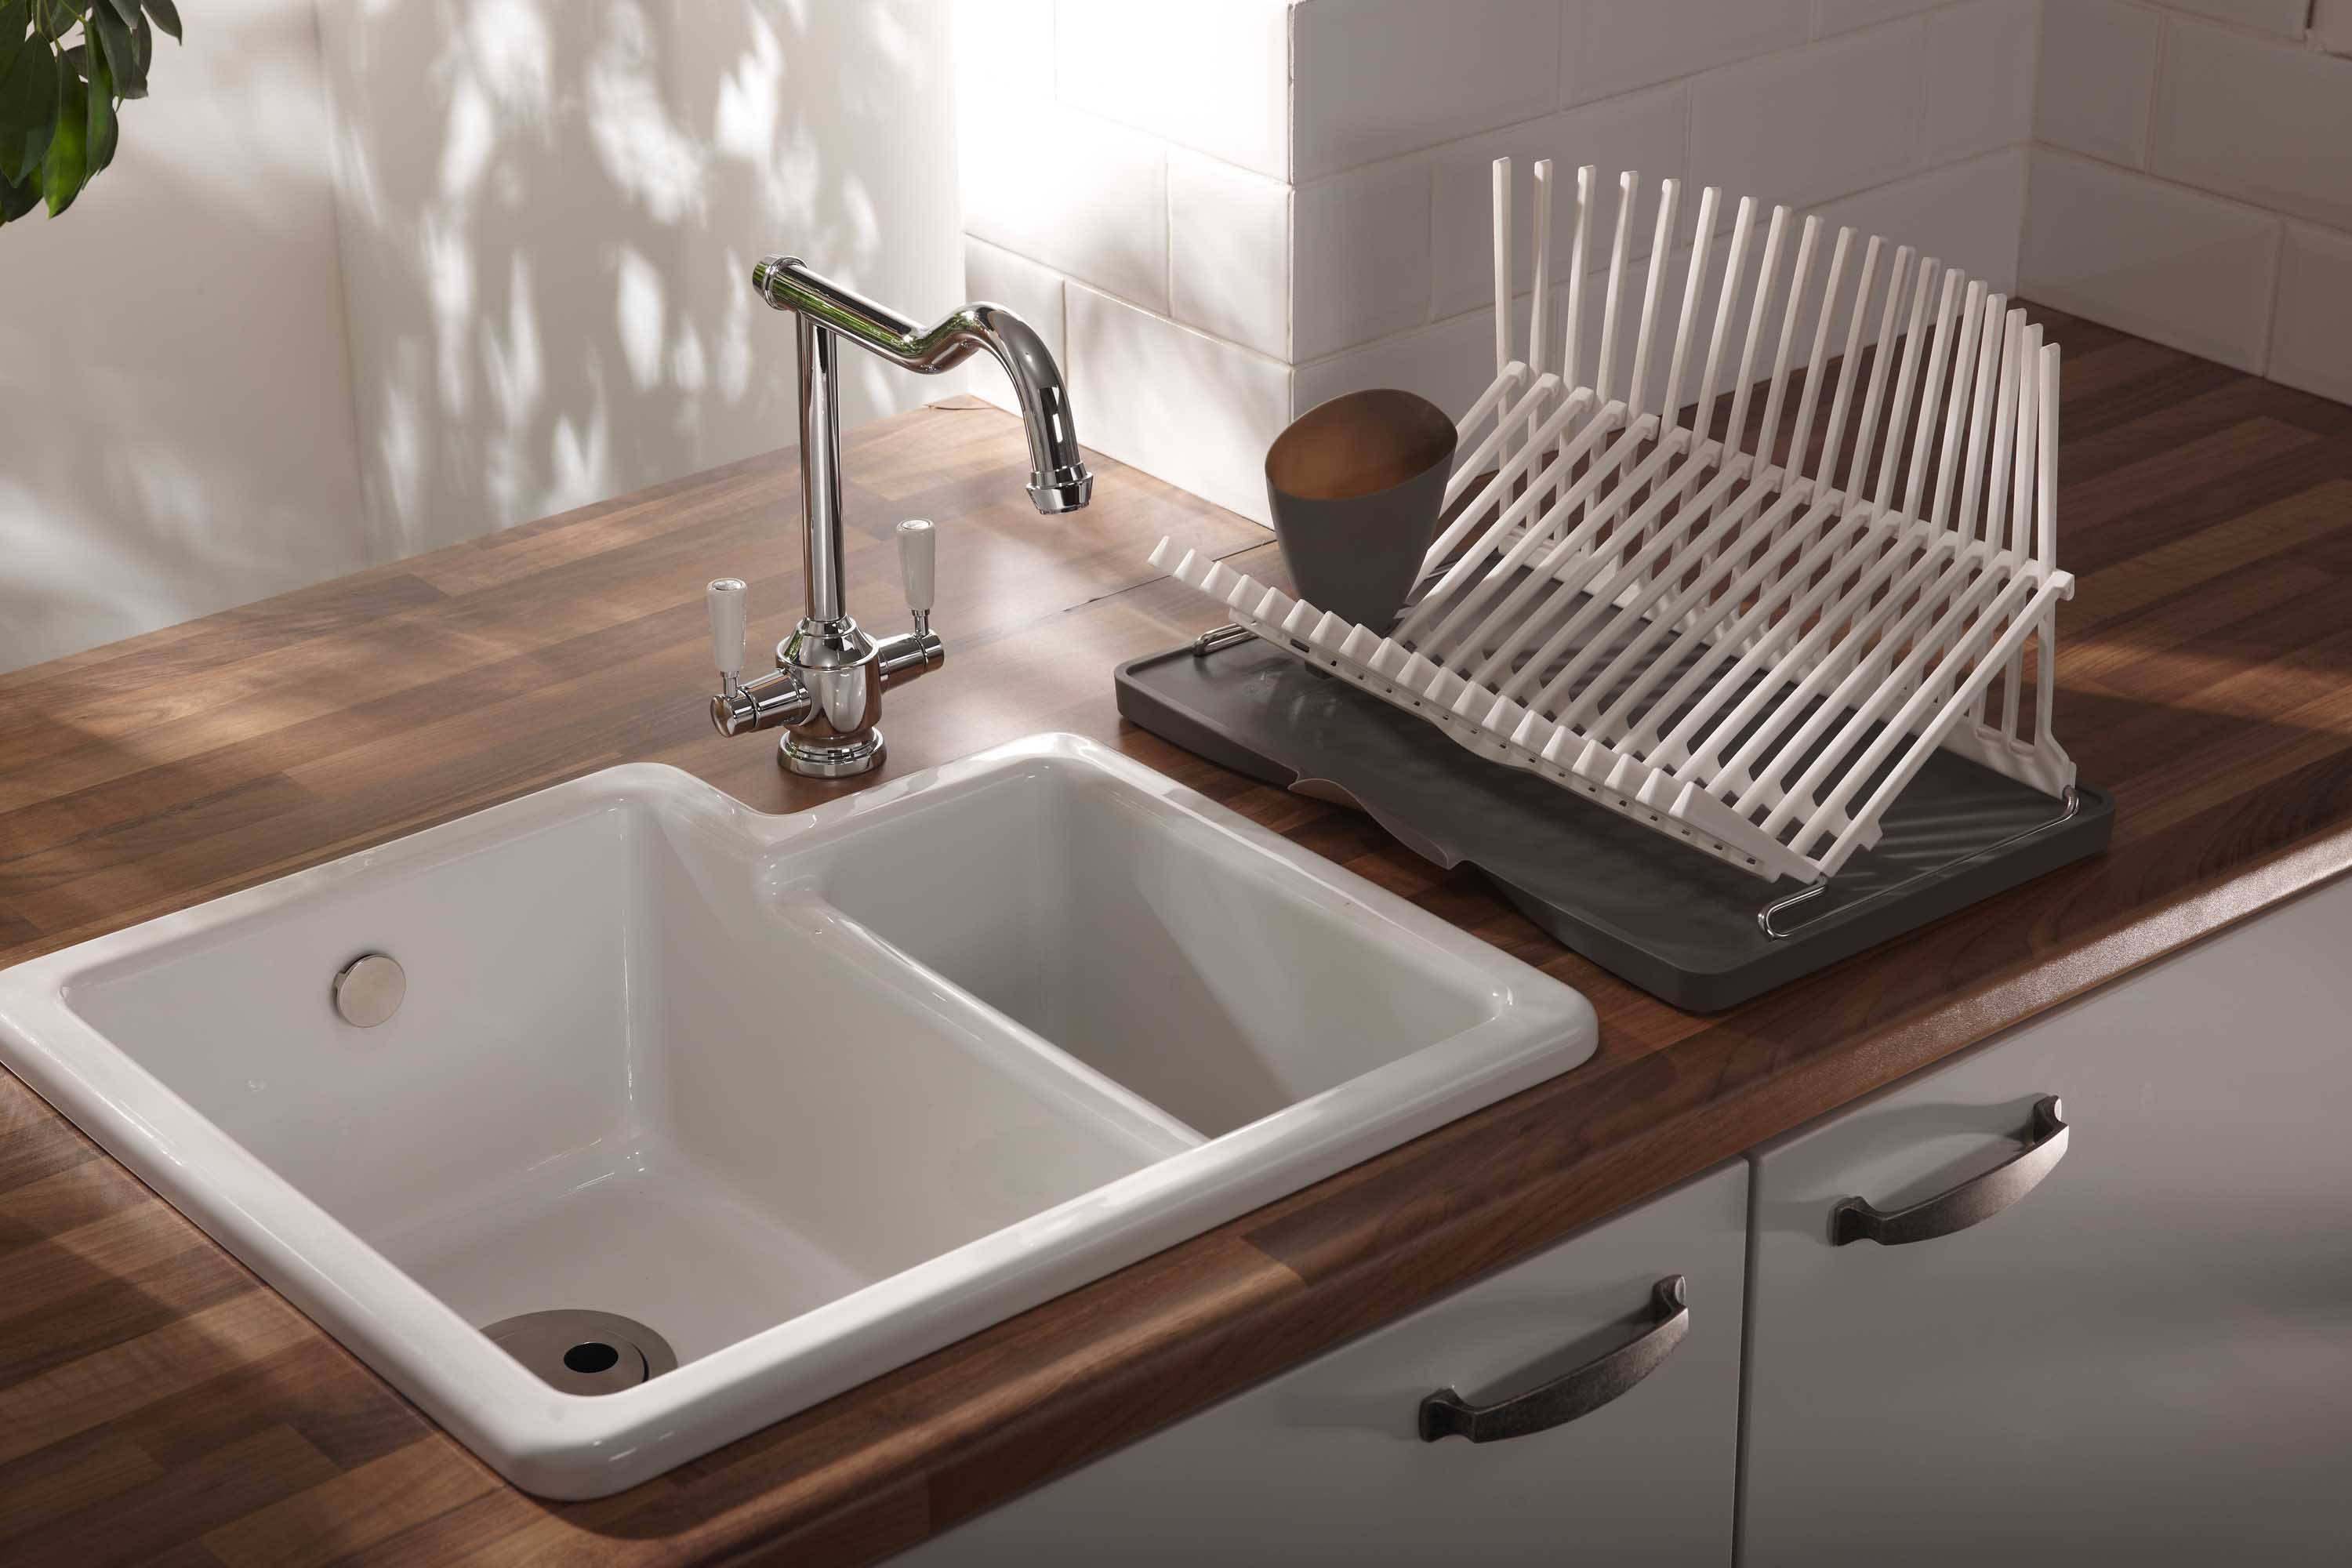 21 Ceramic Sink Design Ideas For Kitchen and Bathroom